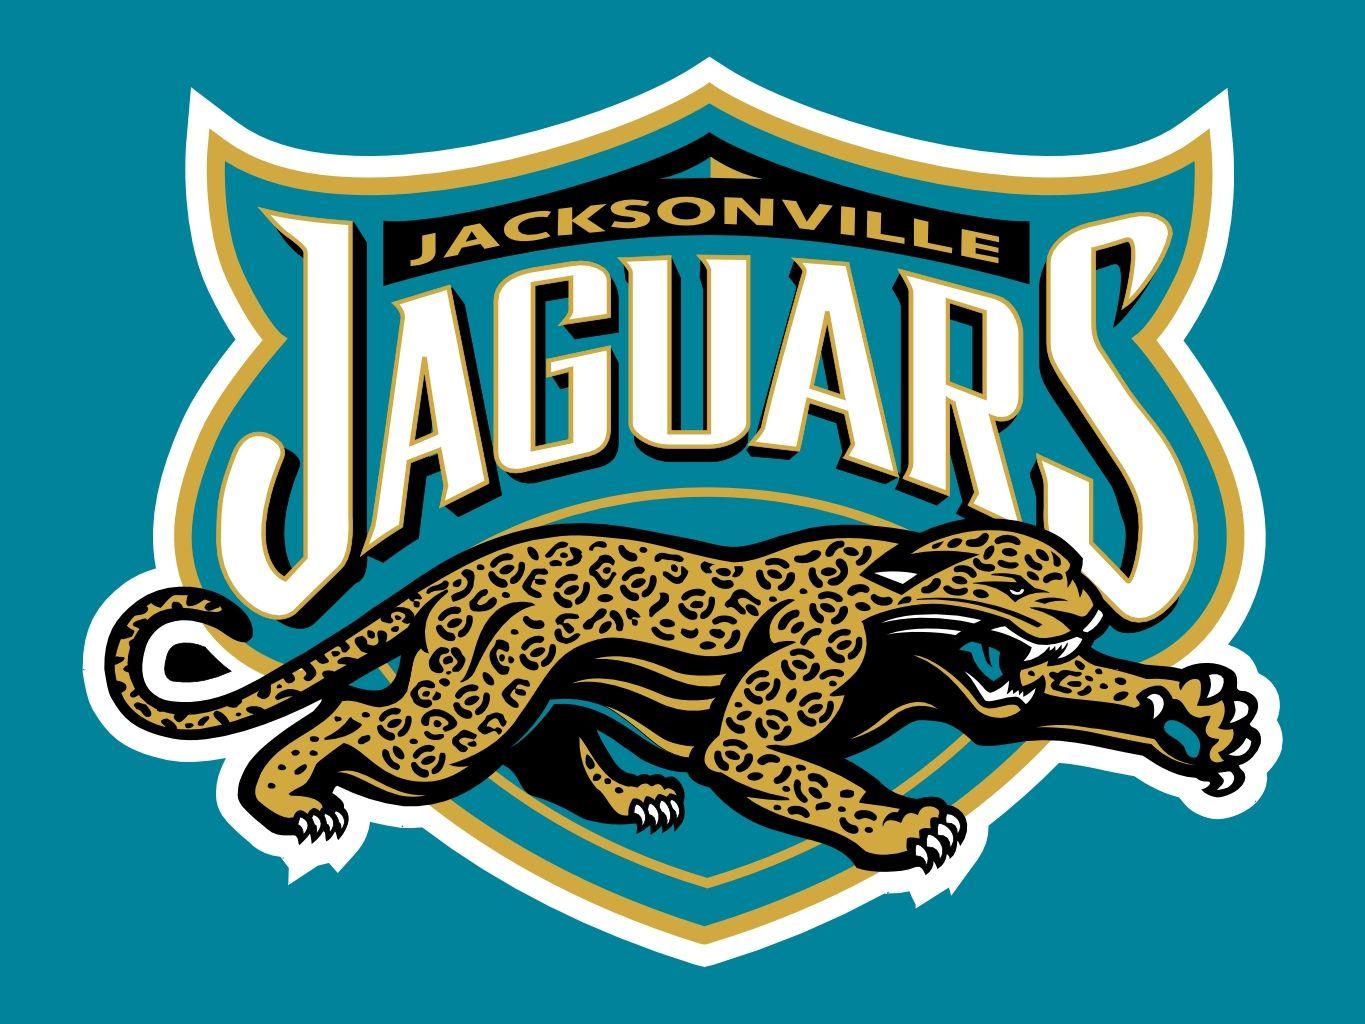 Jaguars Football Team Logo - jacksonville jaguars logos - Yahoo Image Search Results | NFL / NBA ...